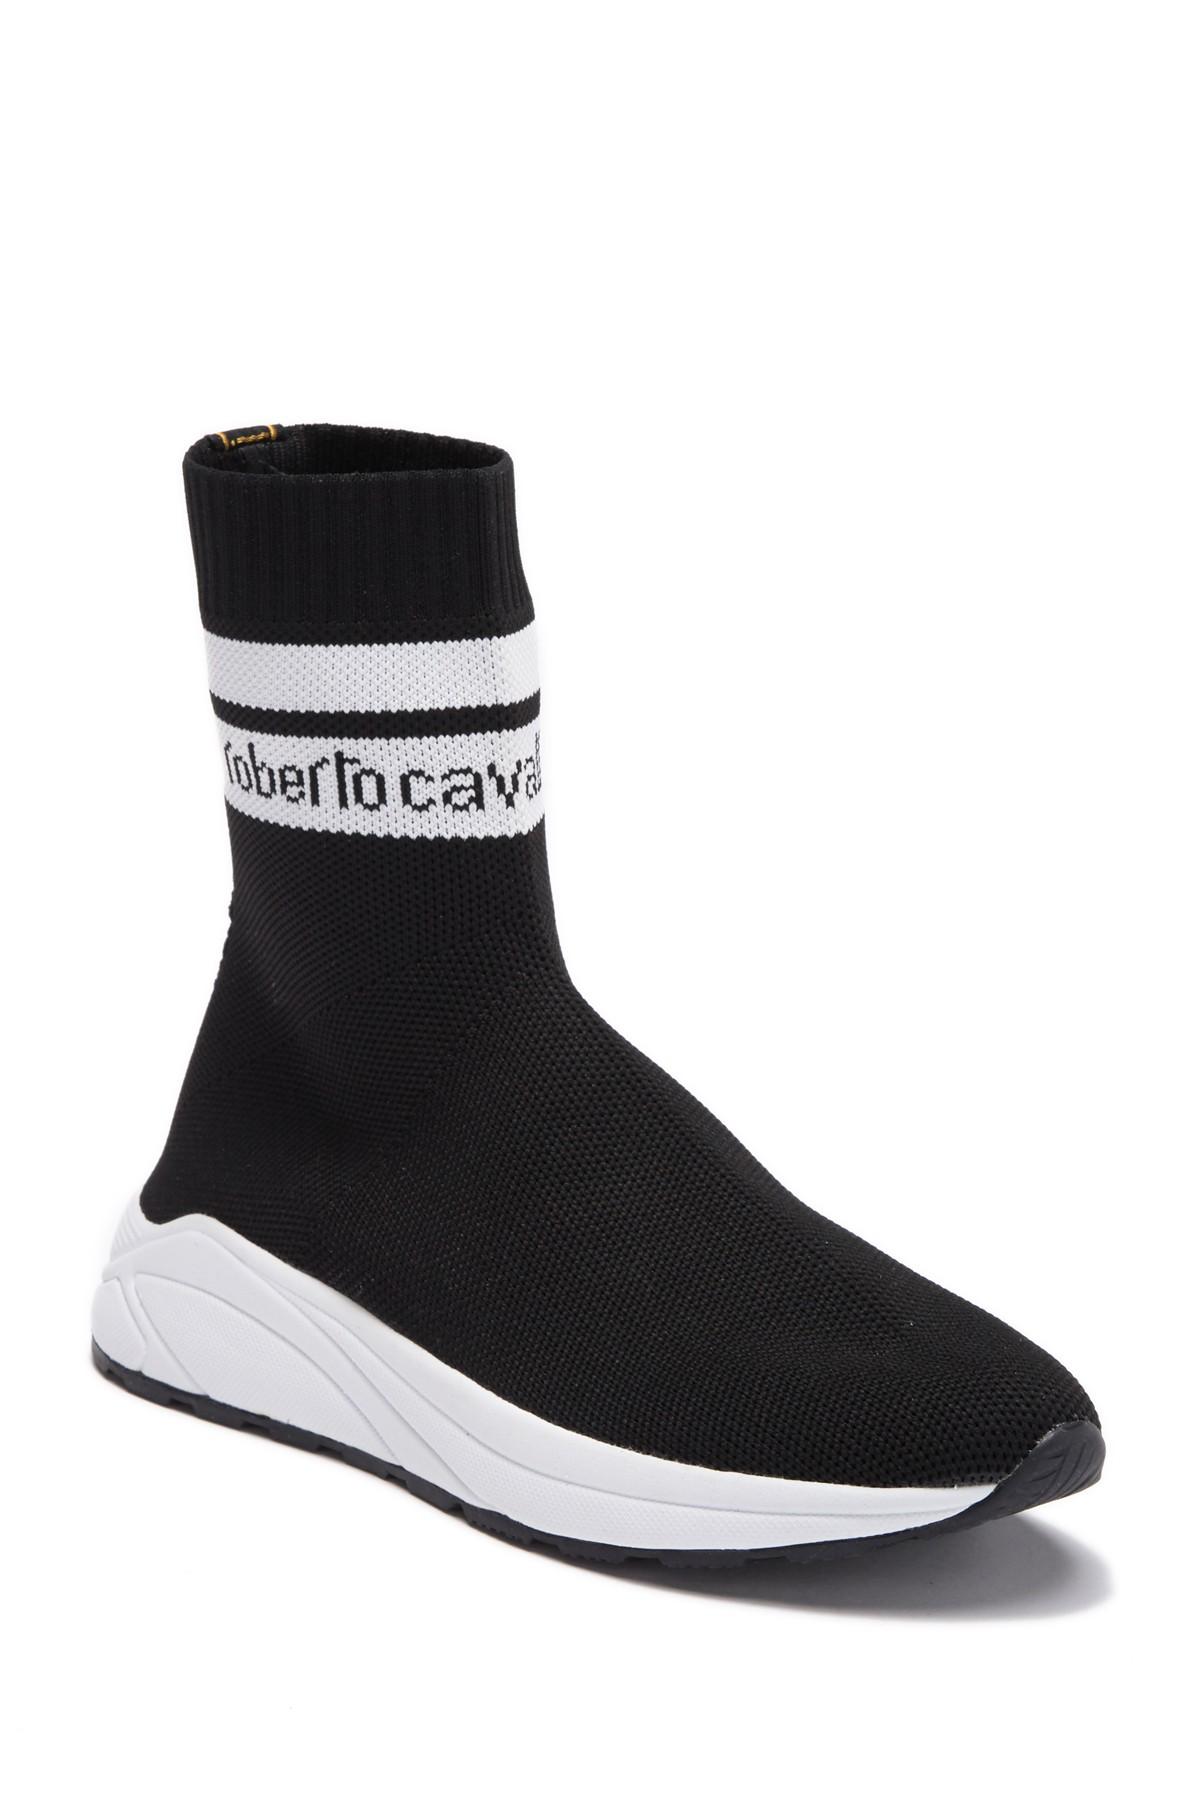 Roberto Cavalli High-top Knit Sock Sneaker in Black - Lyst